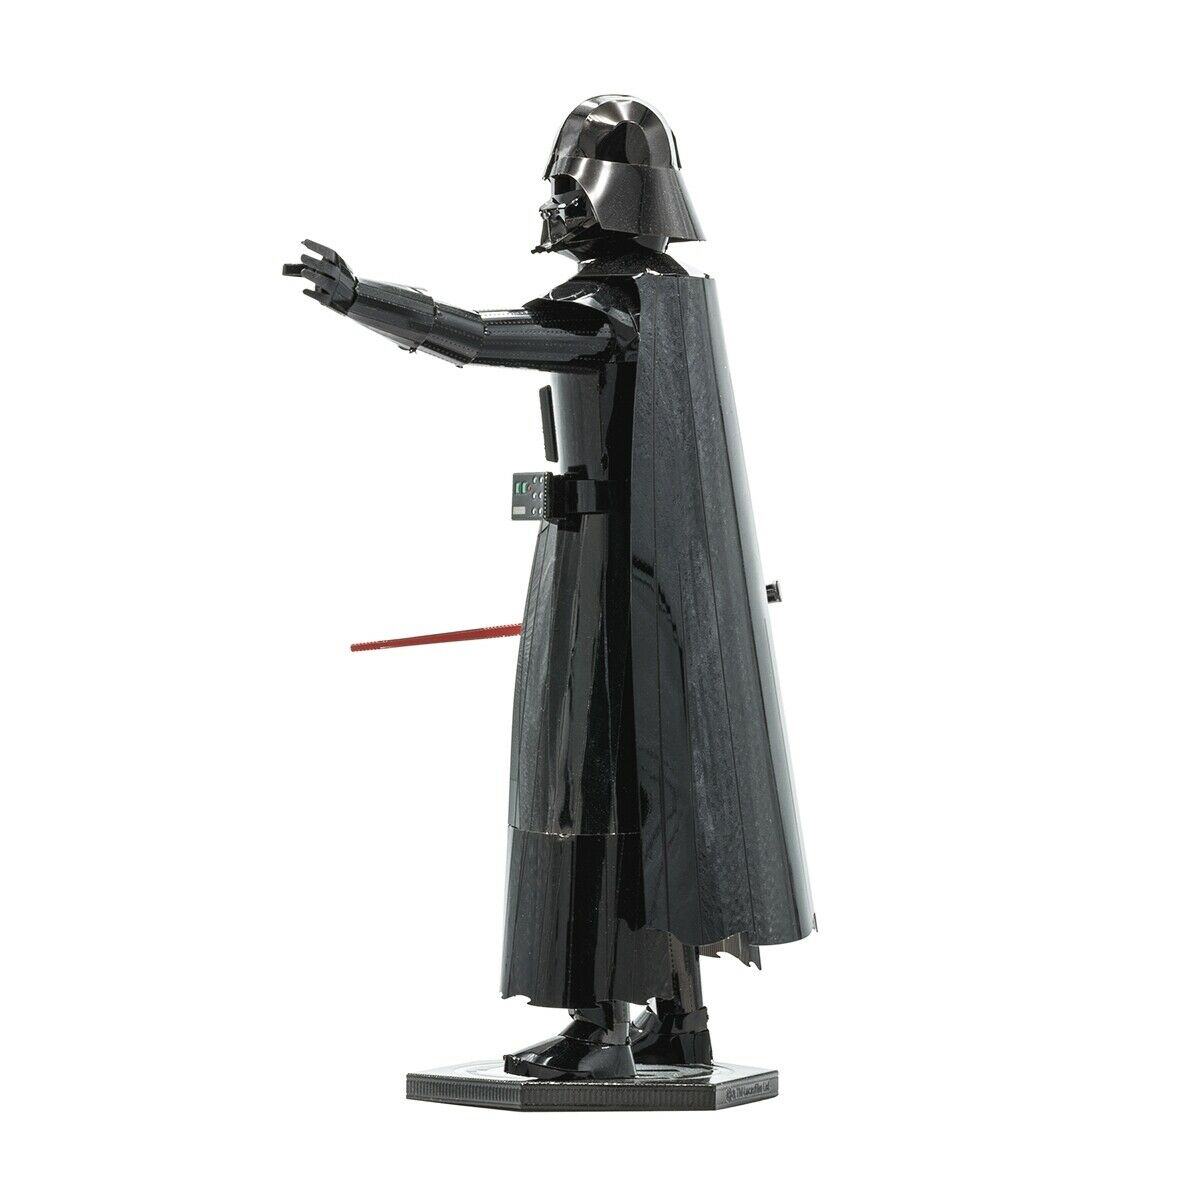 ICONX Star wars: Darth Vader 3D Model